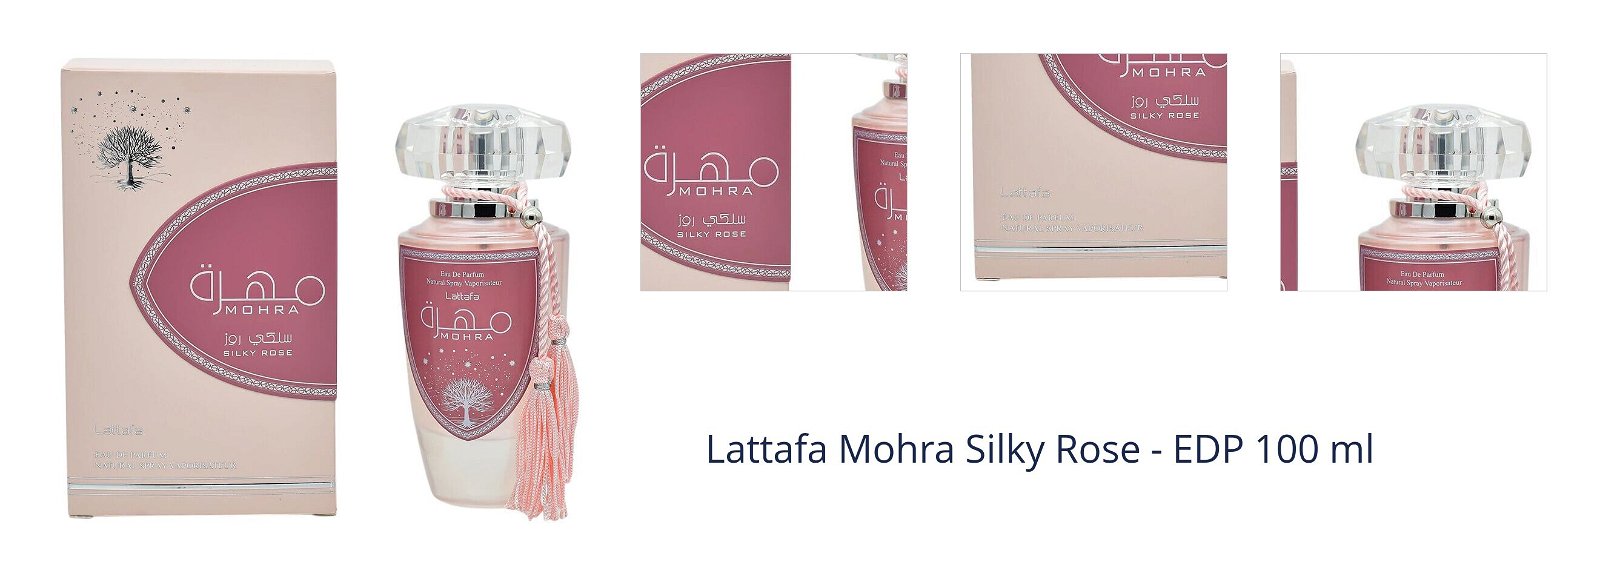 Lattafa Mohra Silky Rose - EDP 100 ml 1